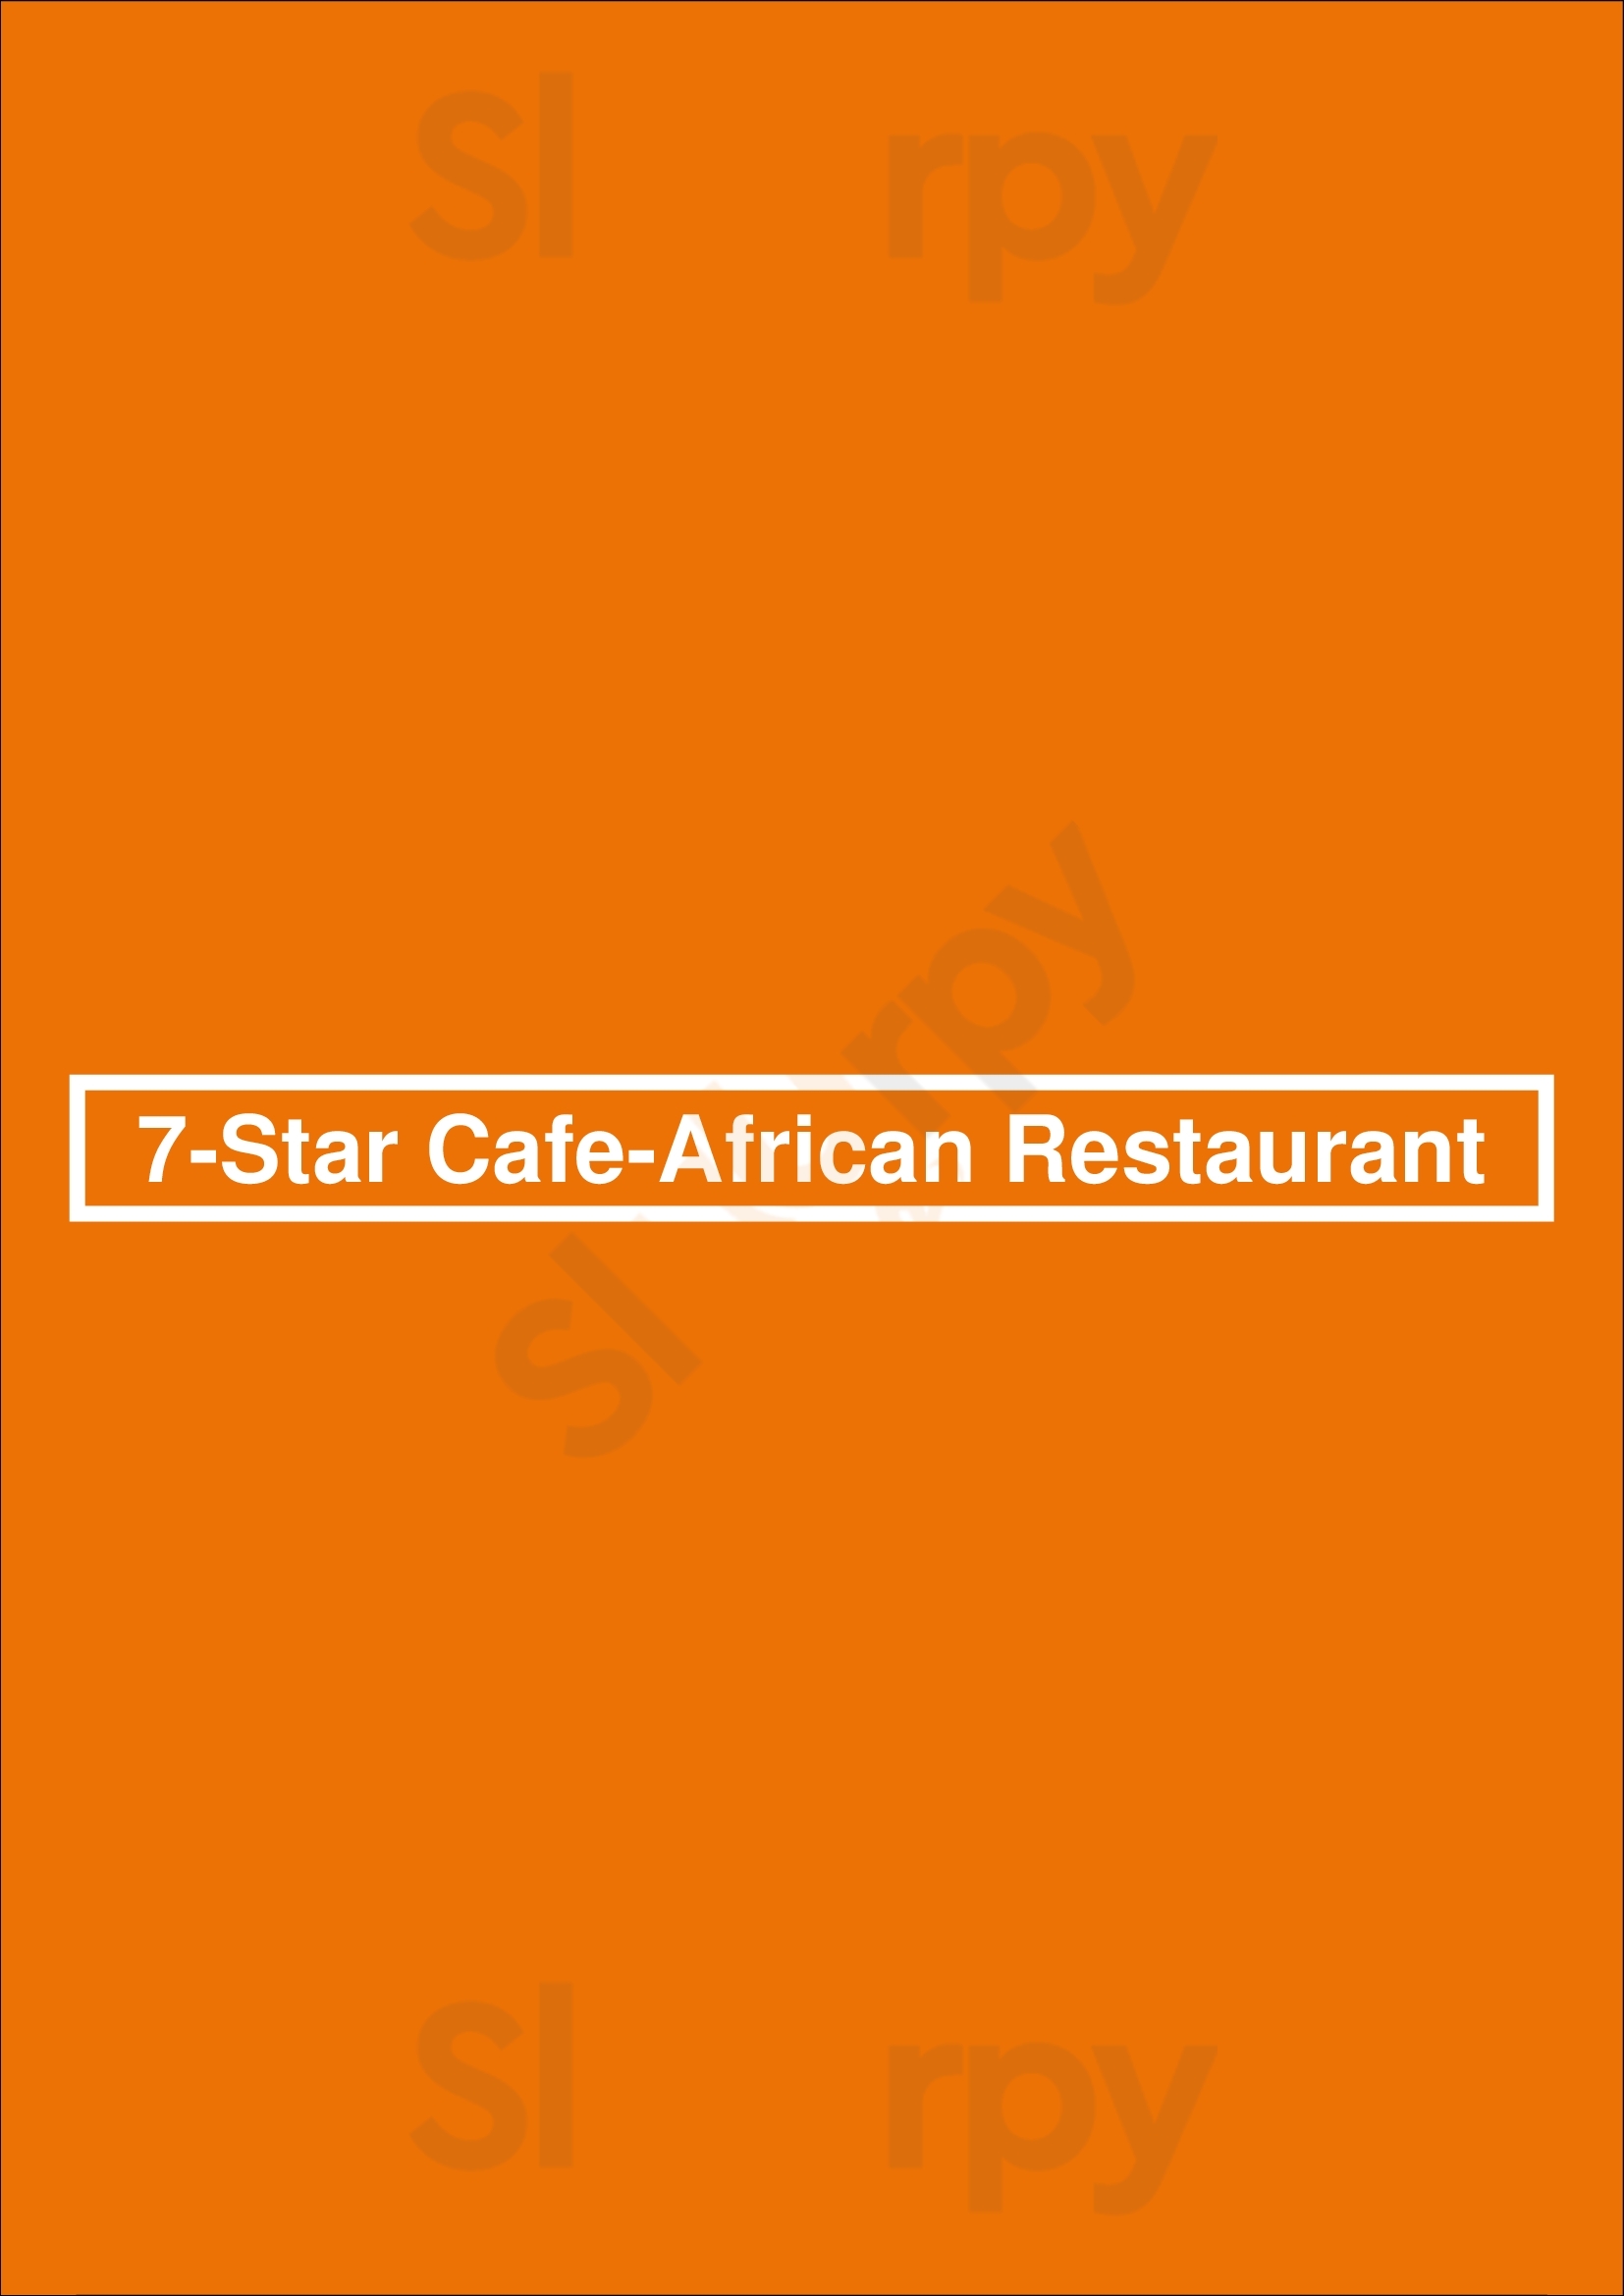 7-star Cafe-african Restaurant Houston Menu - 1